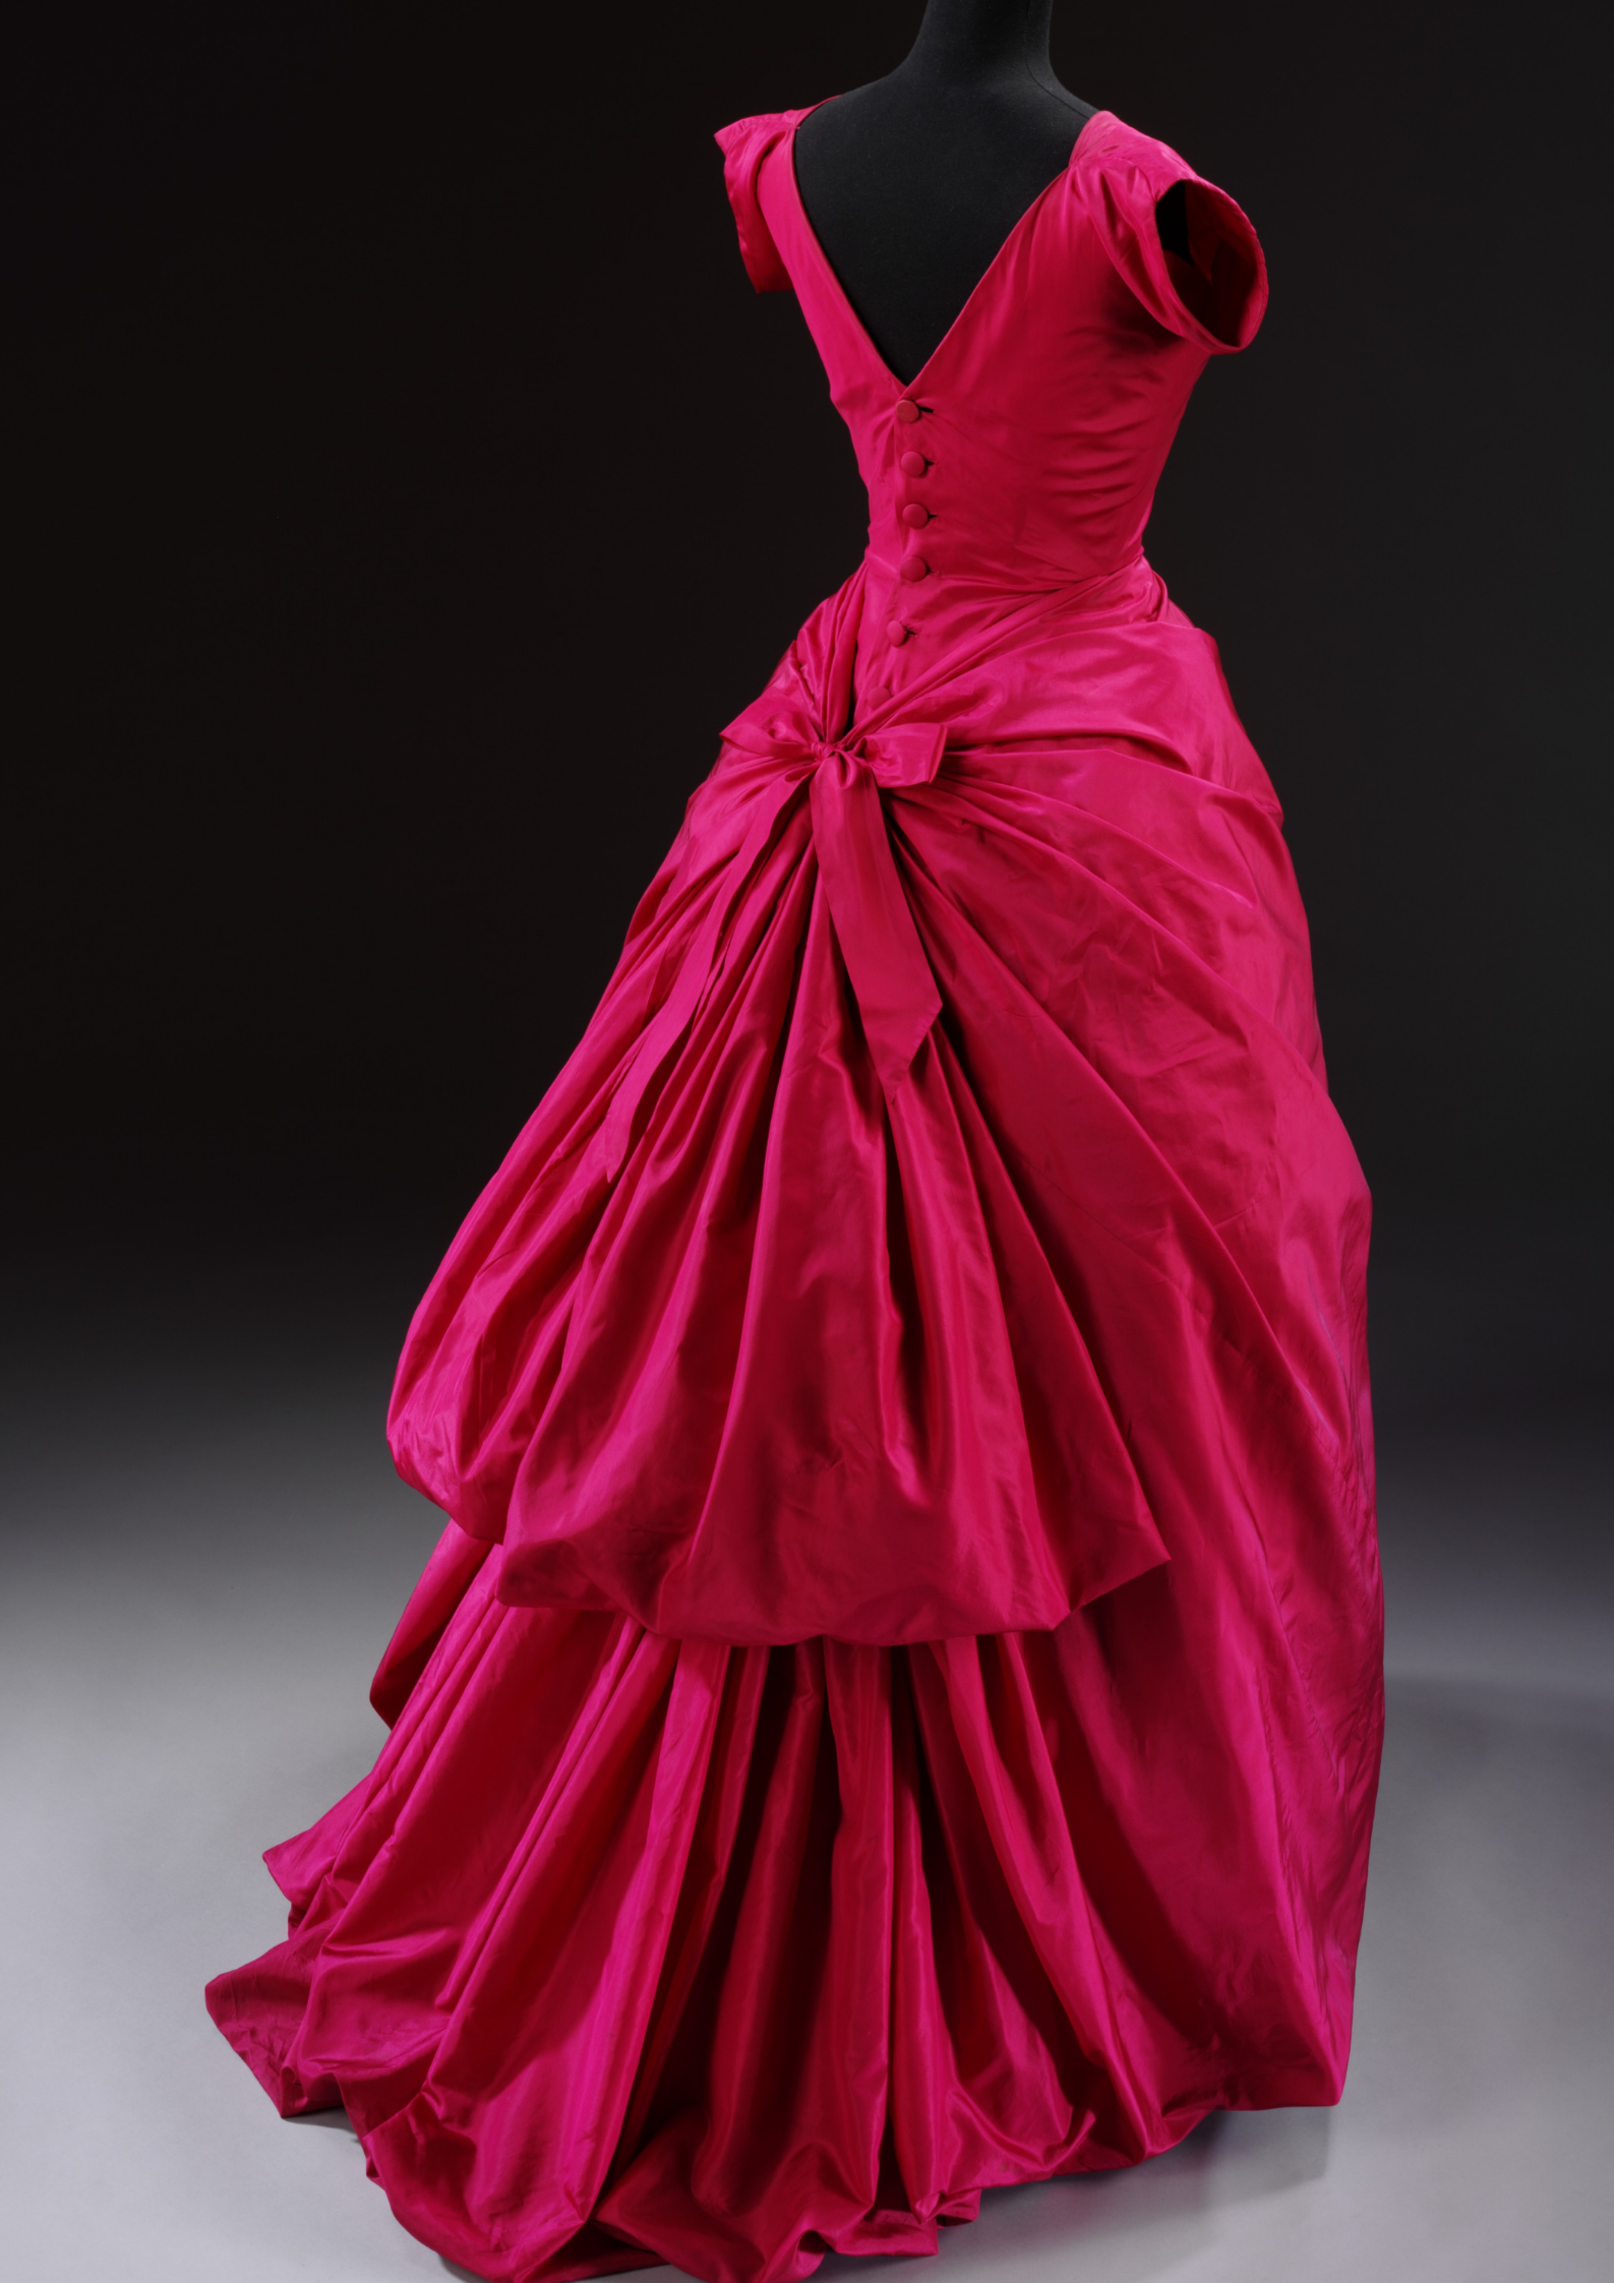 Silk taffeta evening dress, Cristóbal Balenciaga, Paris, 1955 - © Victoria and Albert Museum, London